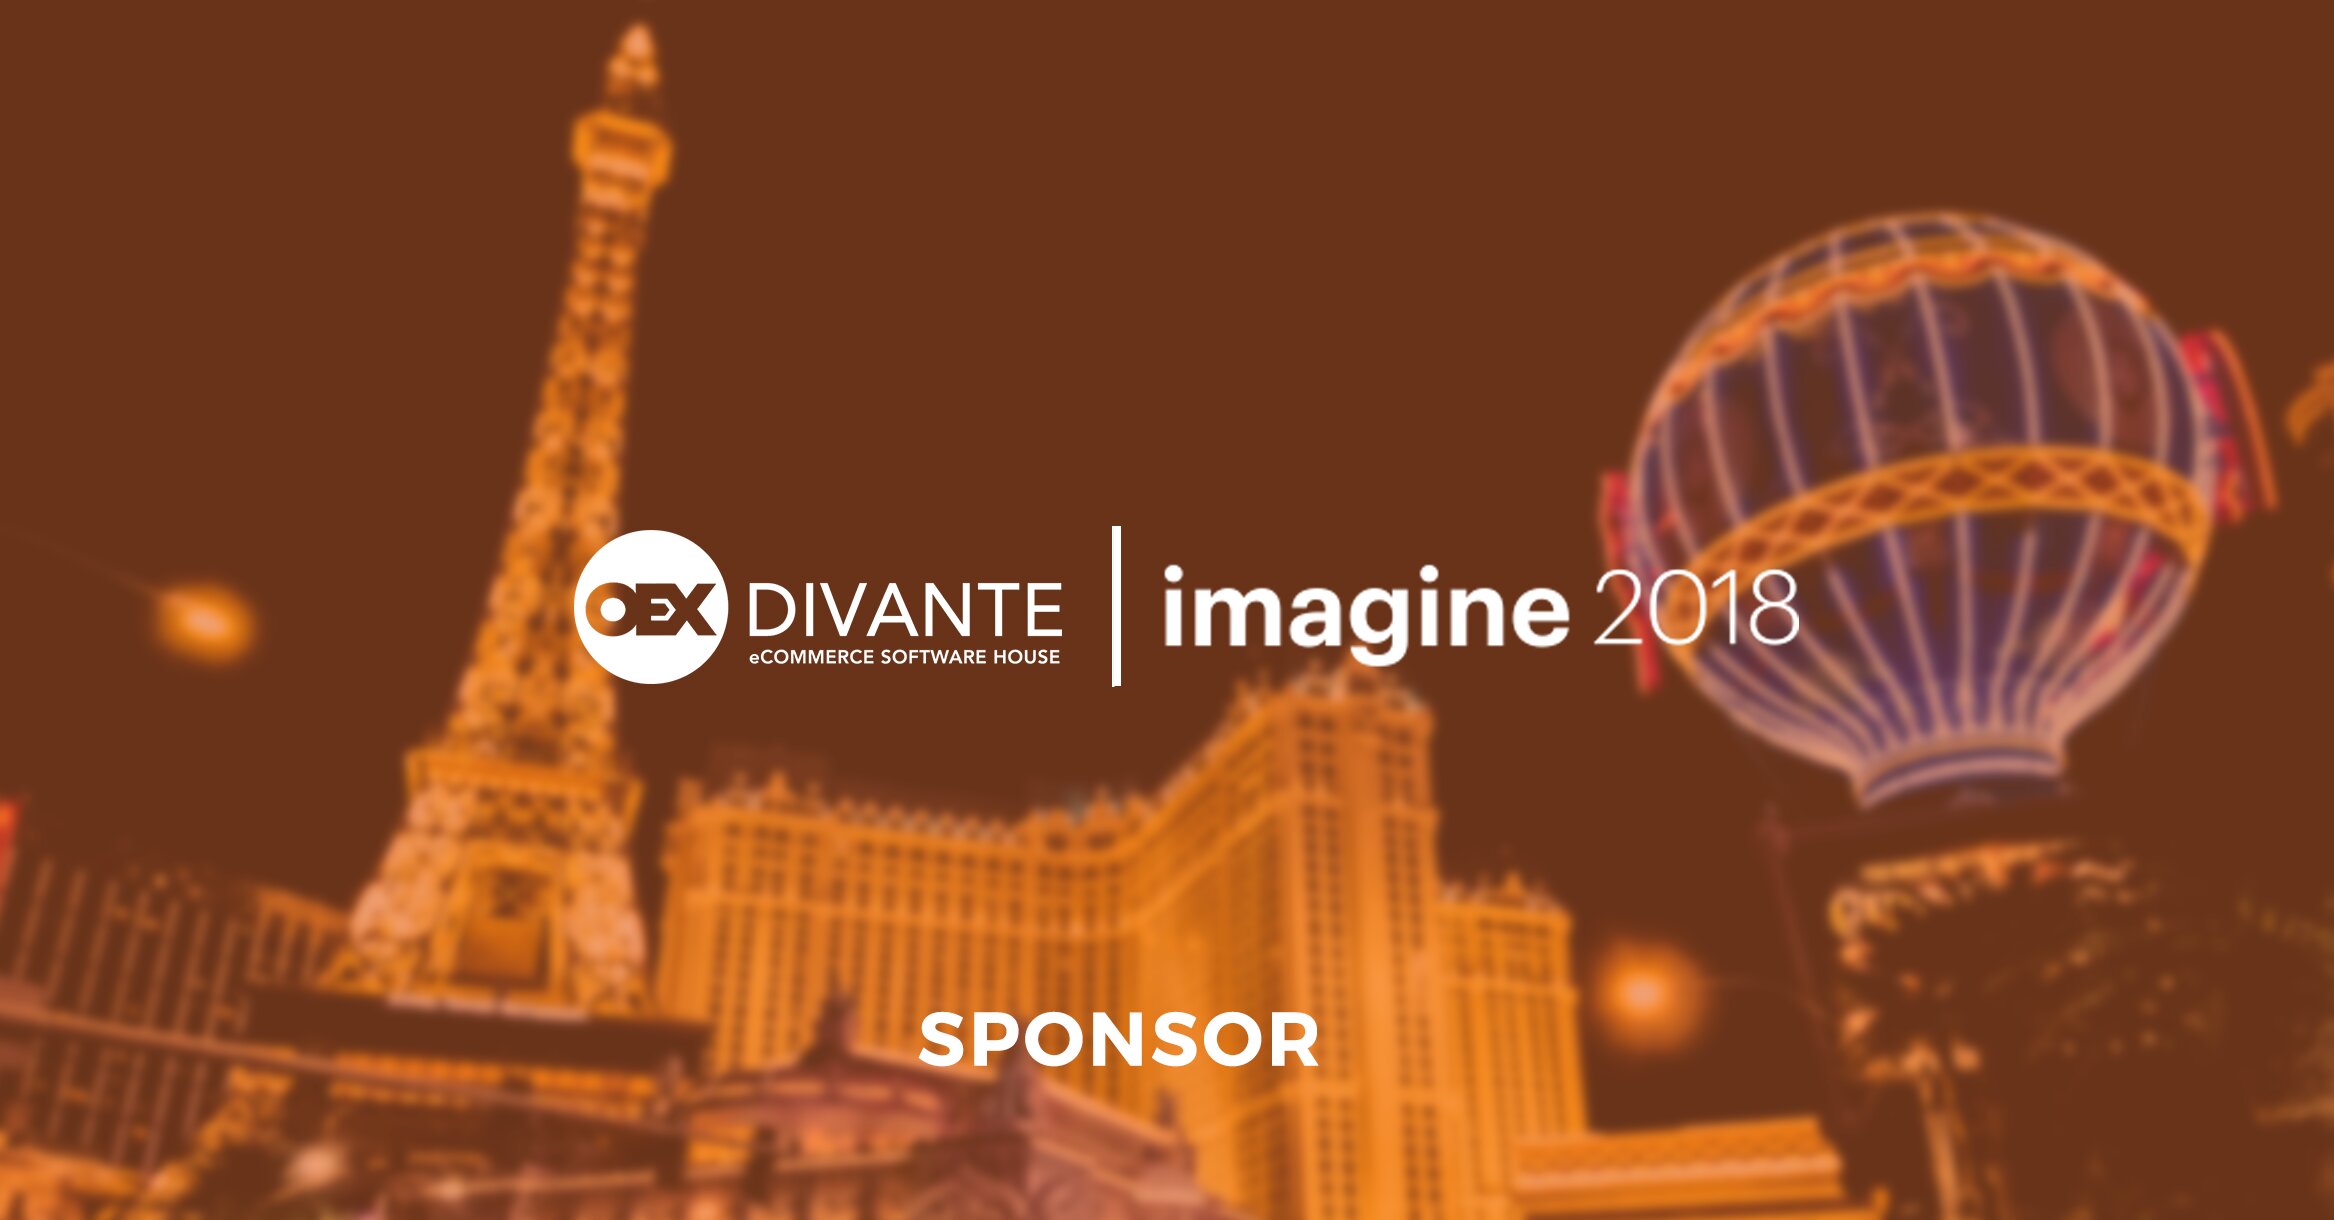 Divante to Sponsor Magento Commerce 2018 Imagine Conference